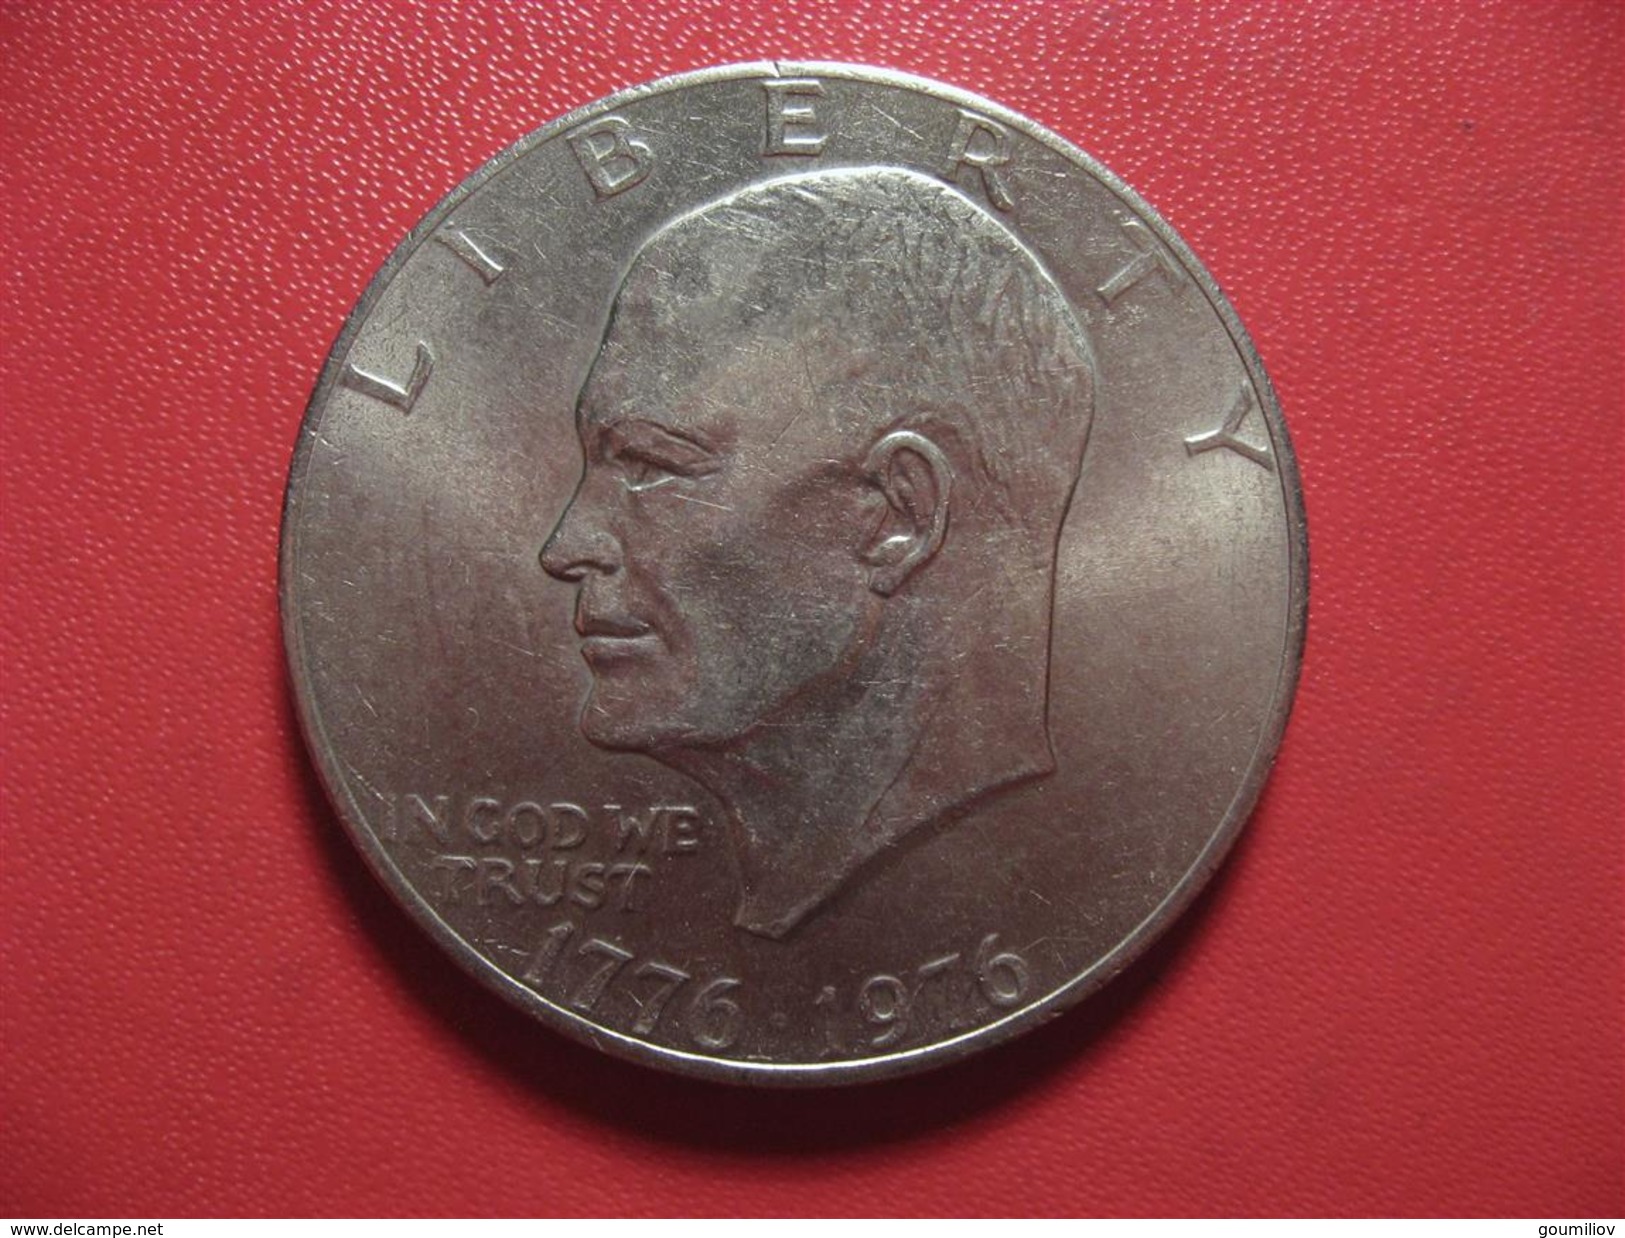 Etats-Unis - USA - One Dollar 1776-1976 2210 - Commemorative